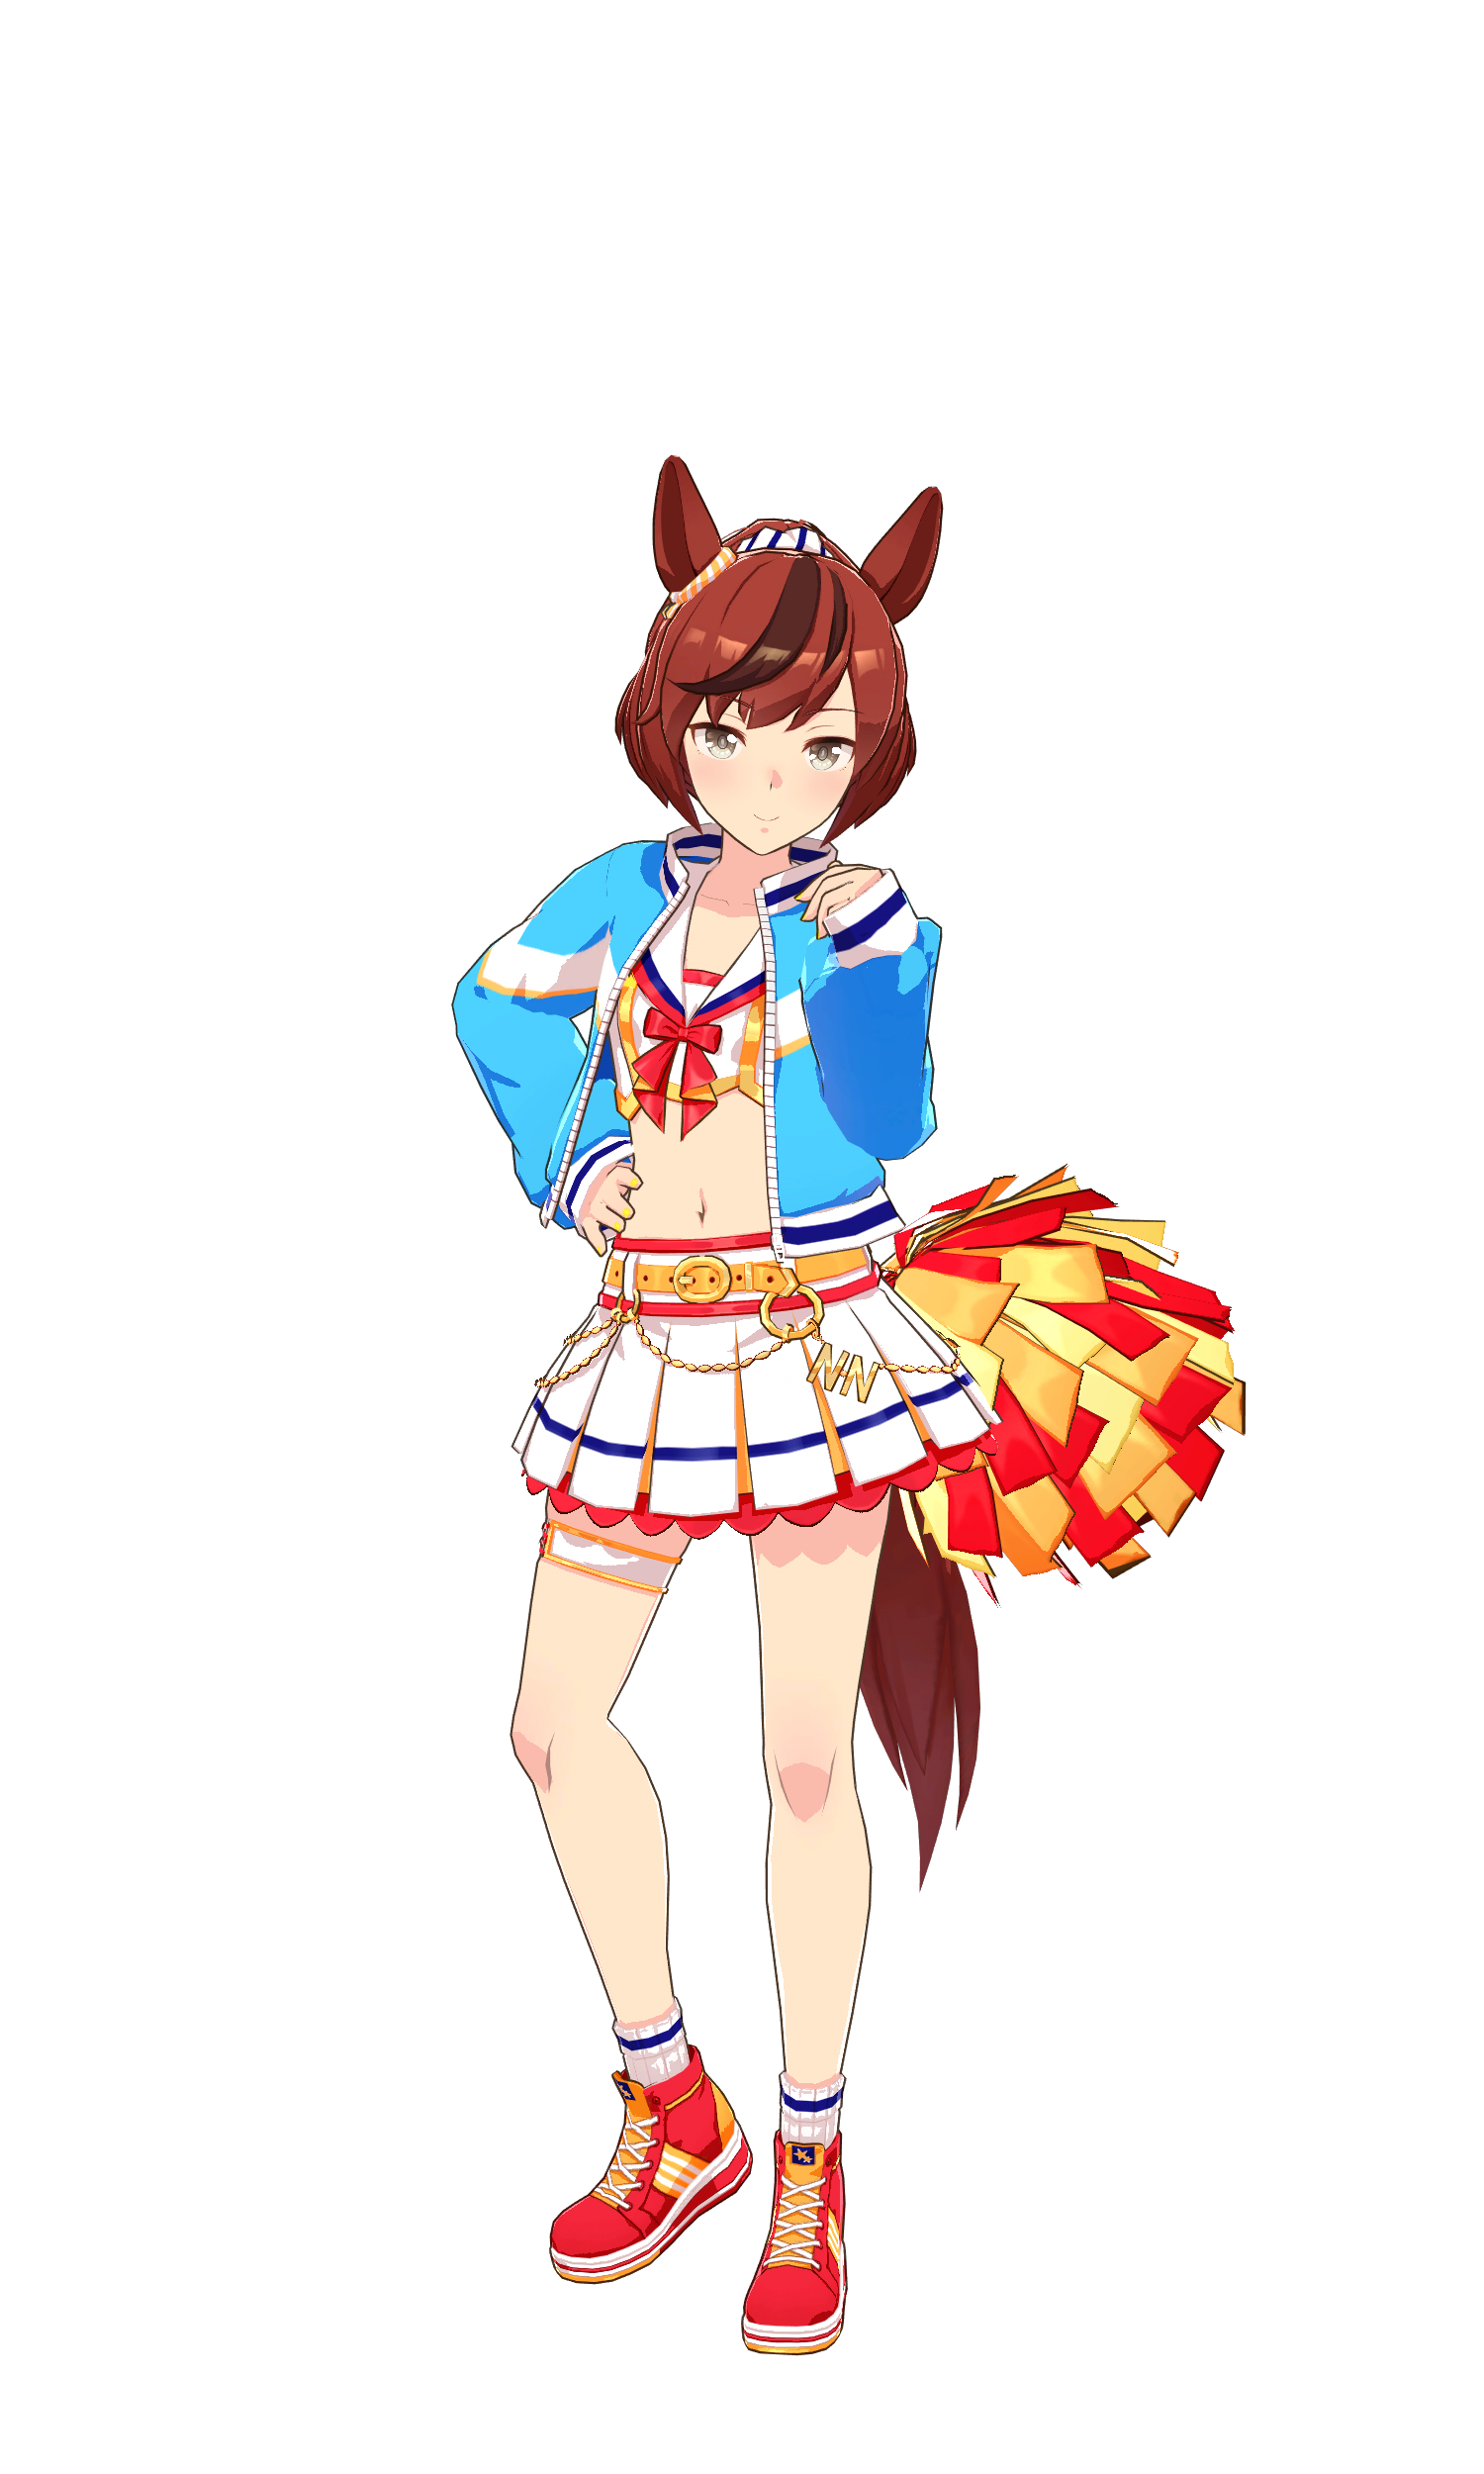 Alternate Costume (Cheerleader)